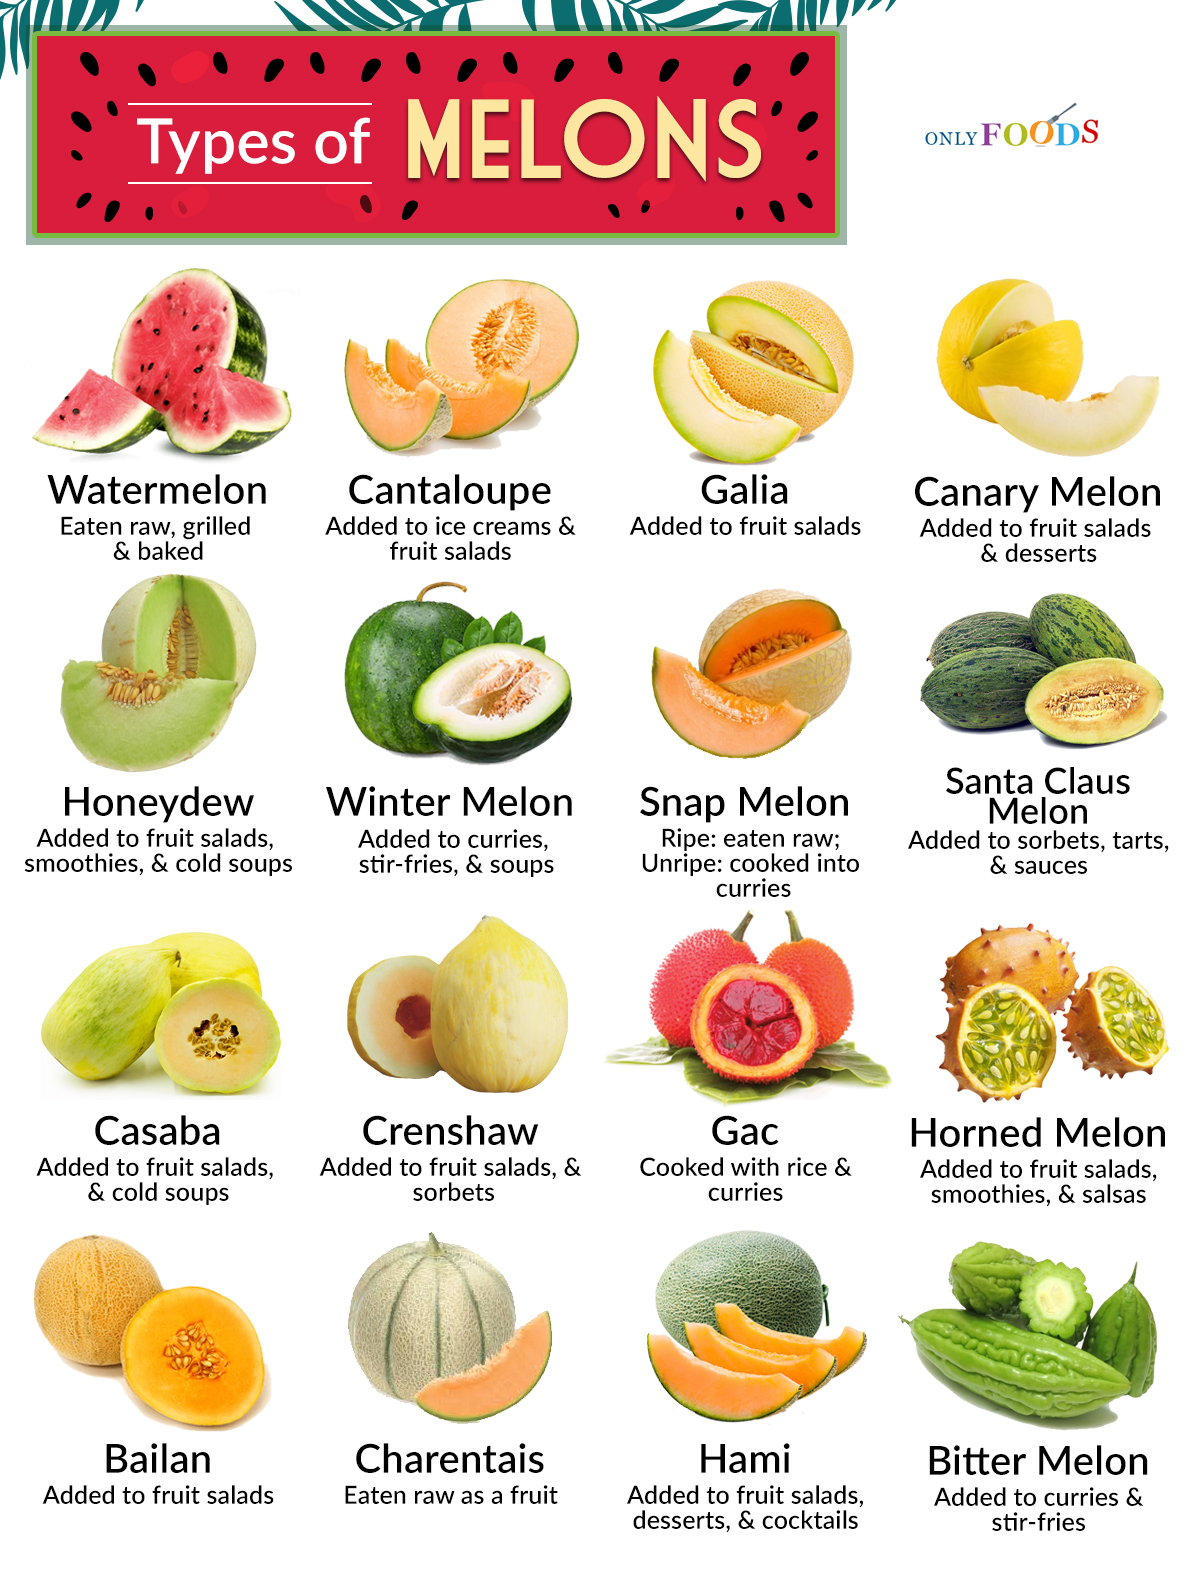 How to Cut Honeydew Melon 3 Different Ways